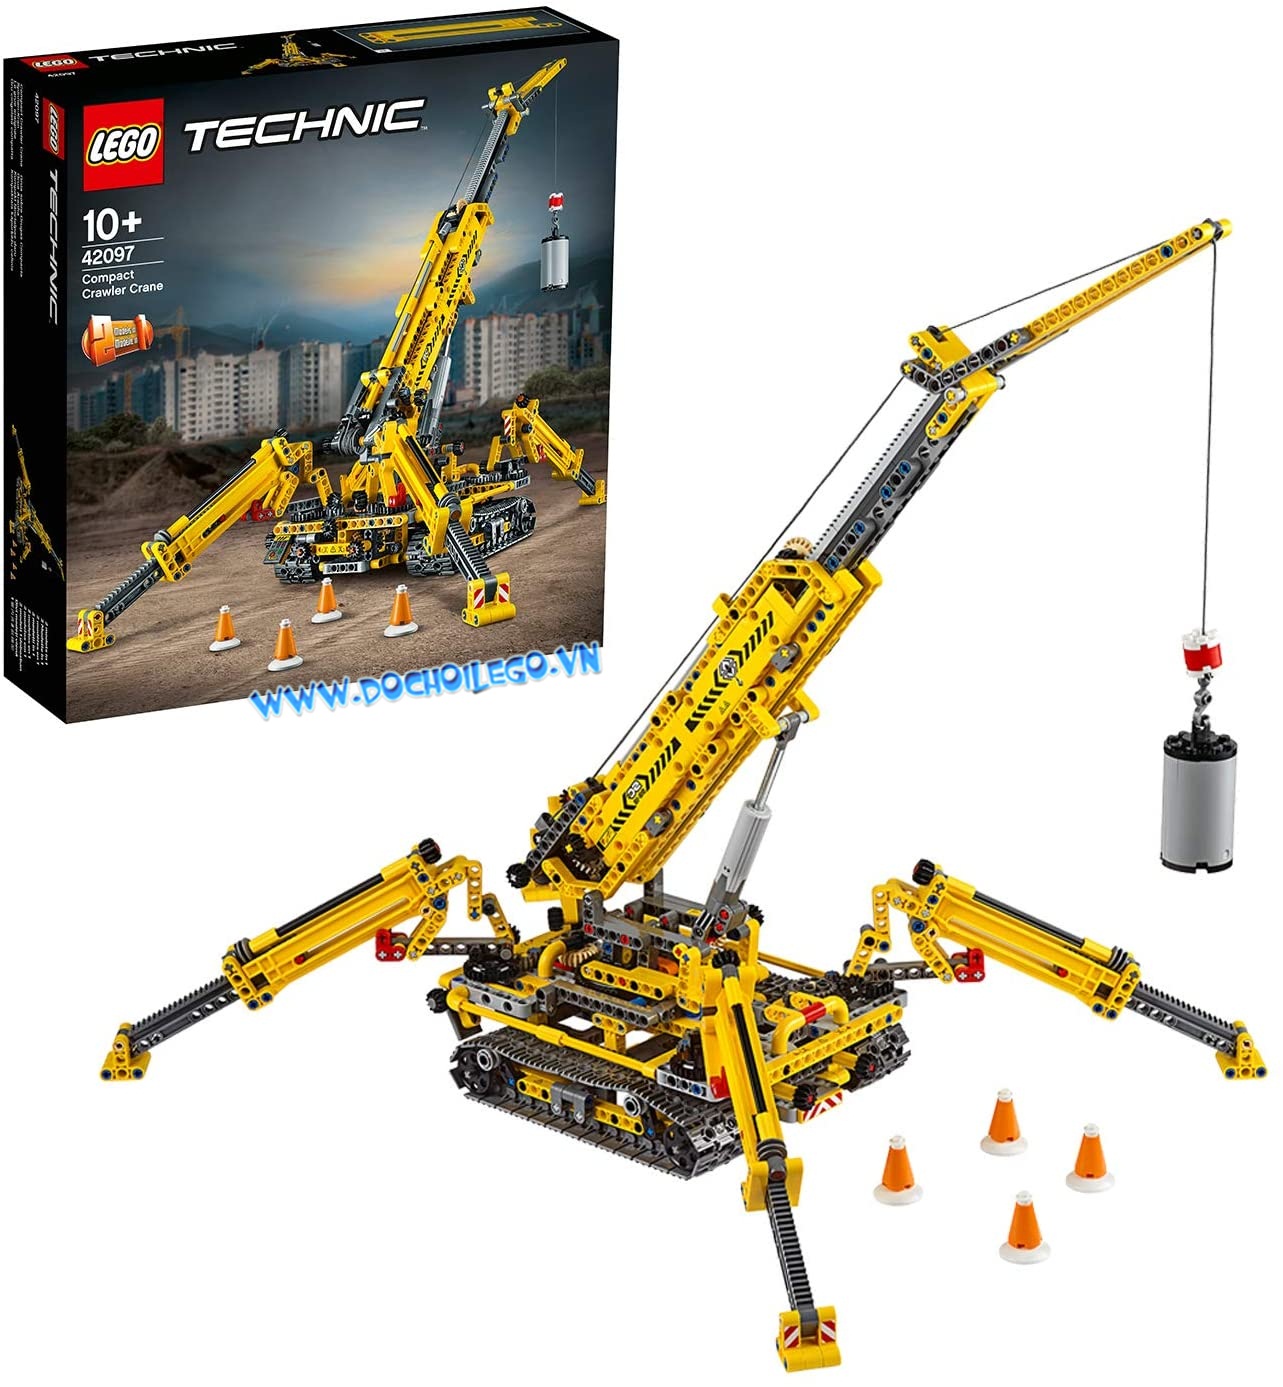 42097 LEGO Technic Compact Crawler Crane - Xe cần trục bánh xich